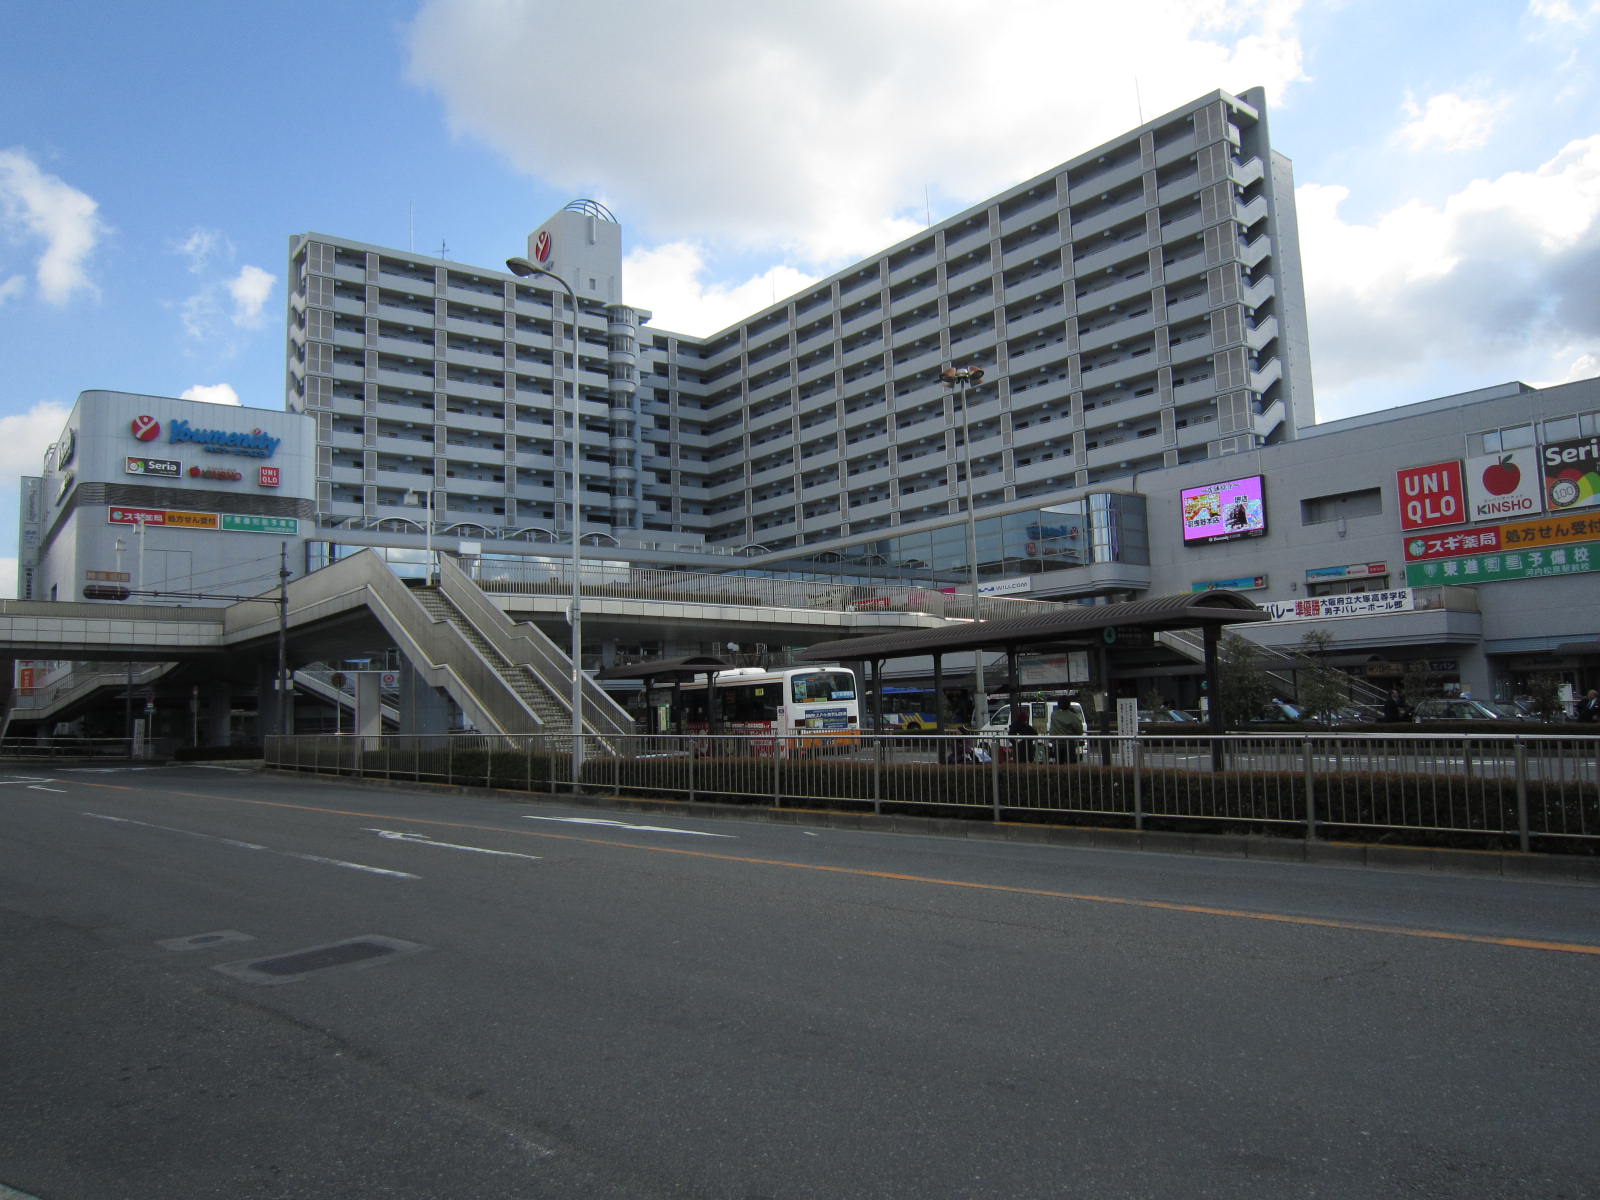 Shopping centre. Dream 613m until sanity Matsubara (shopping center)